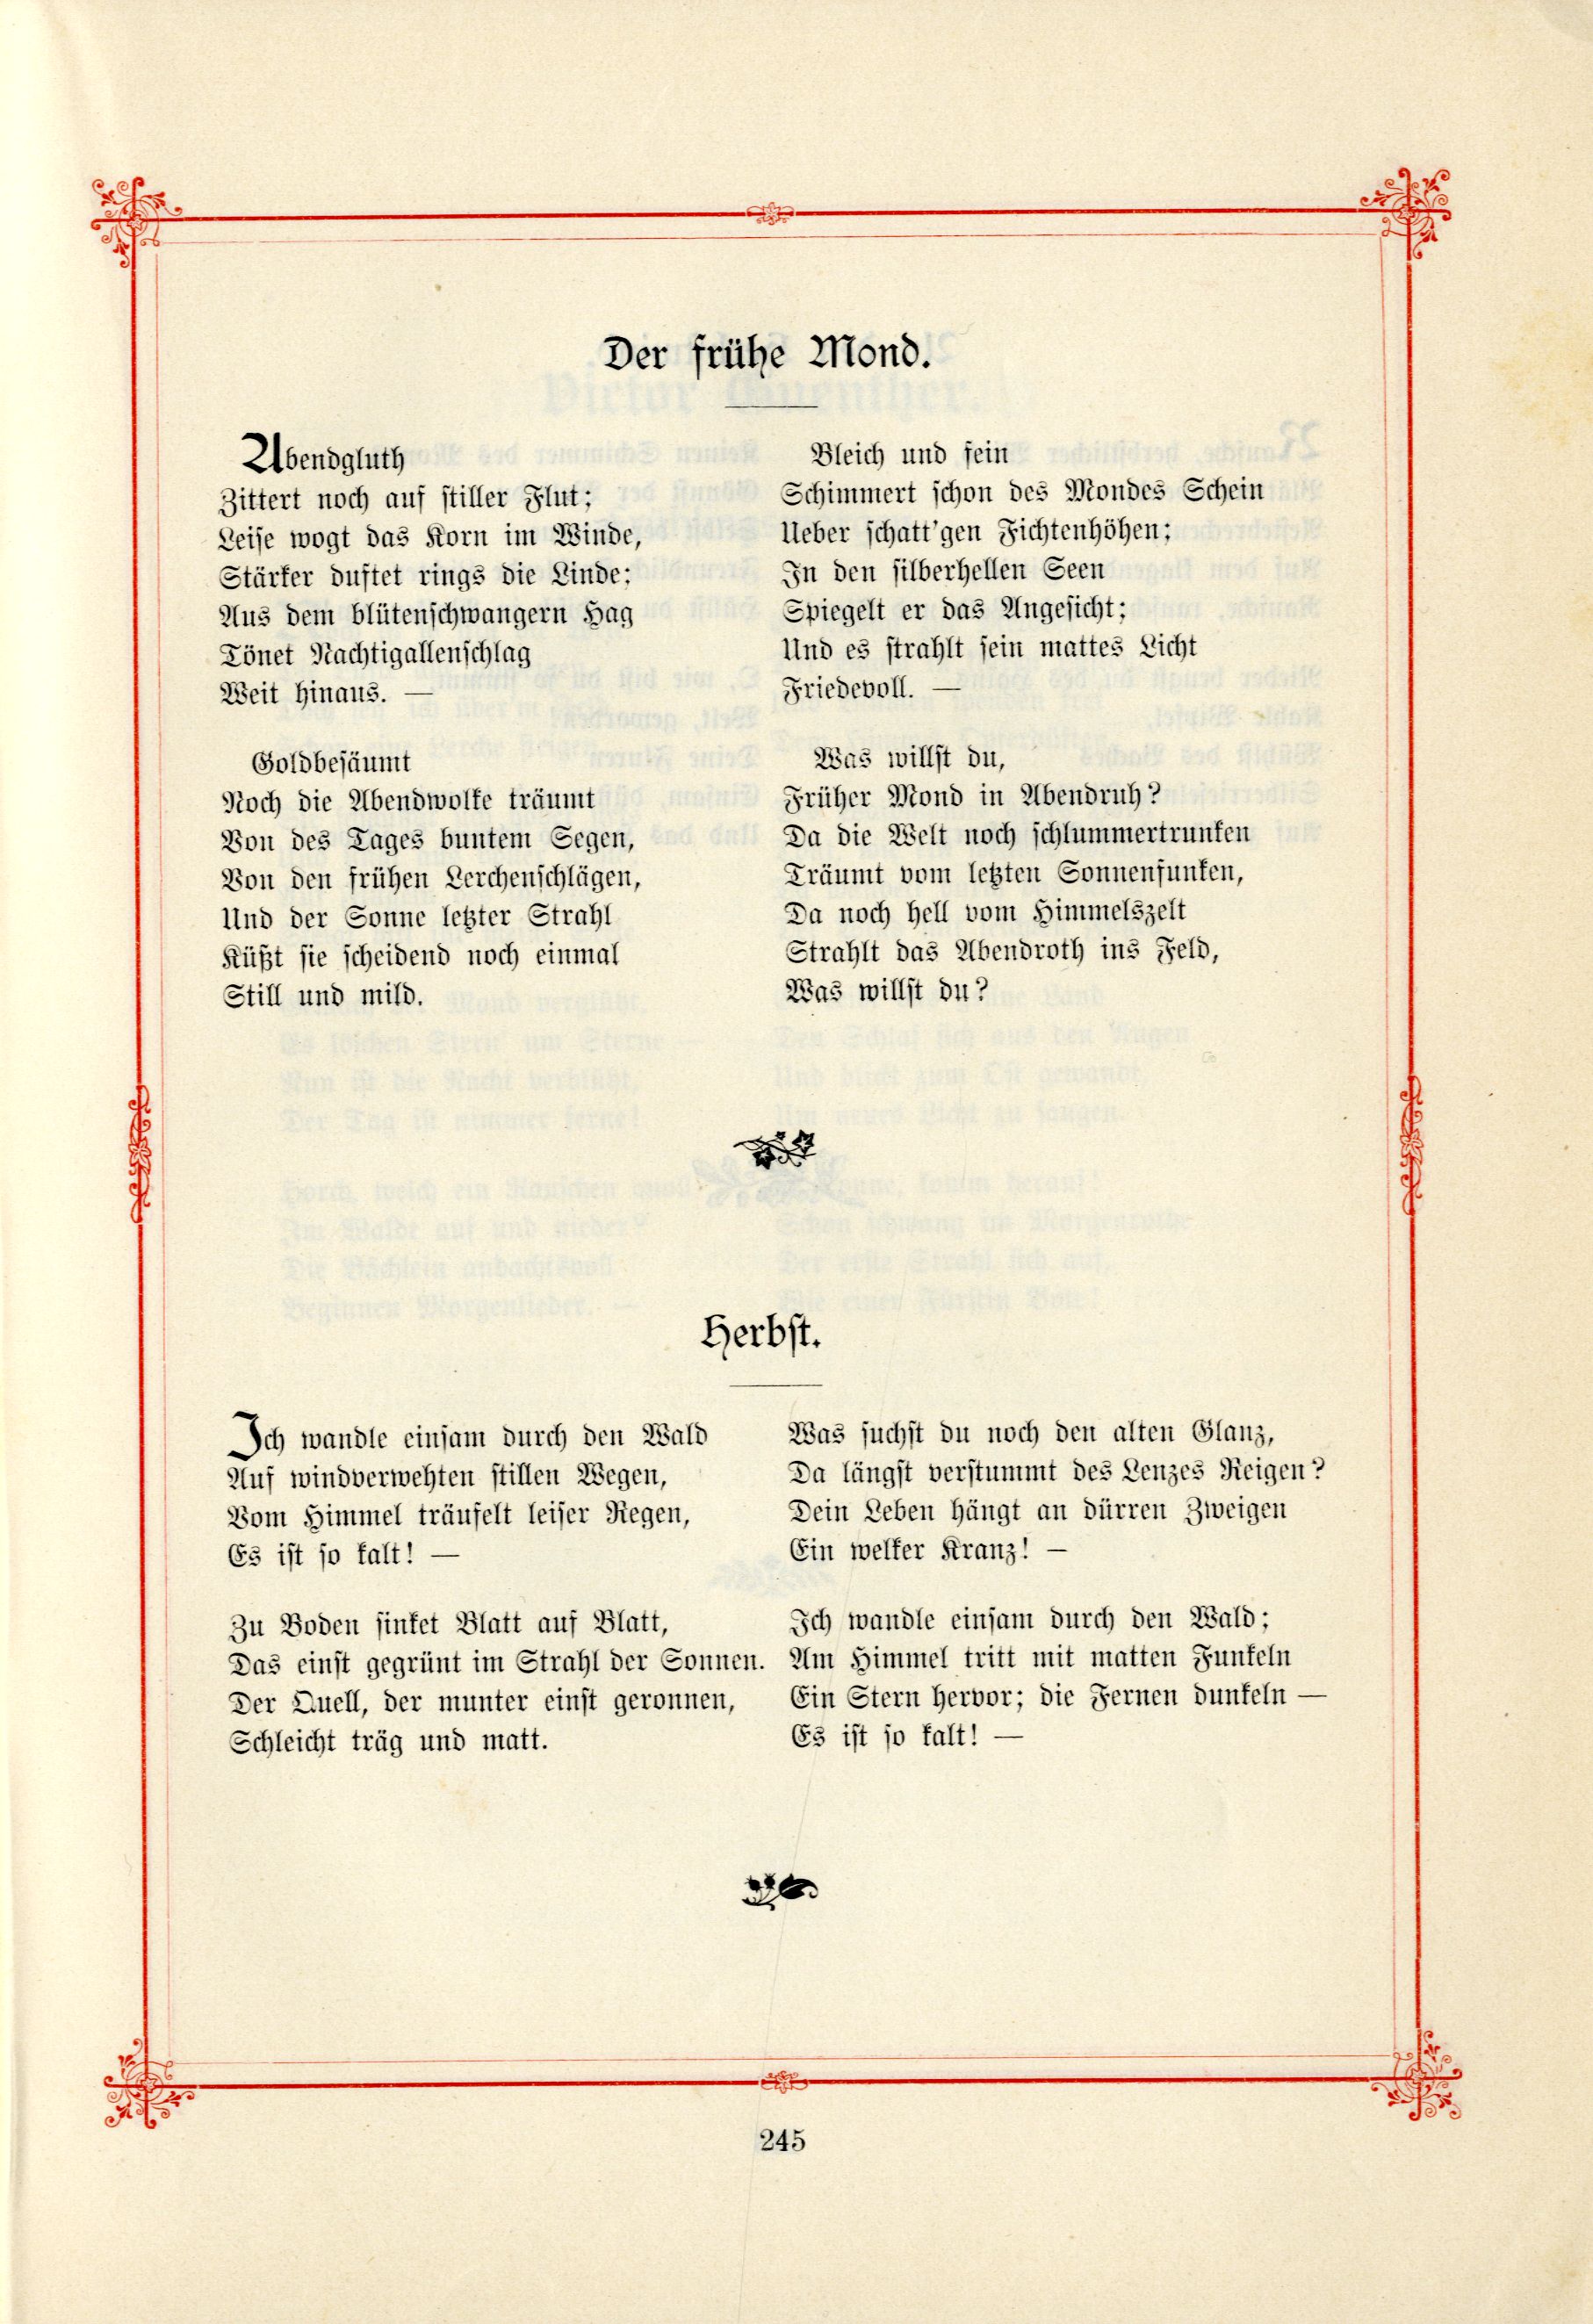 Der frühe Mond (1895) | 1. (245) Main body of text